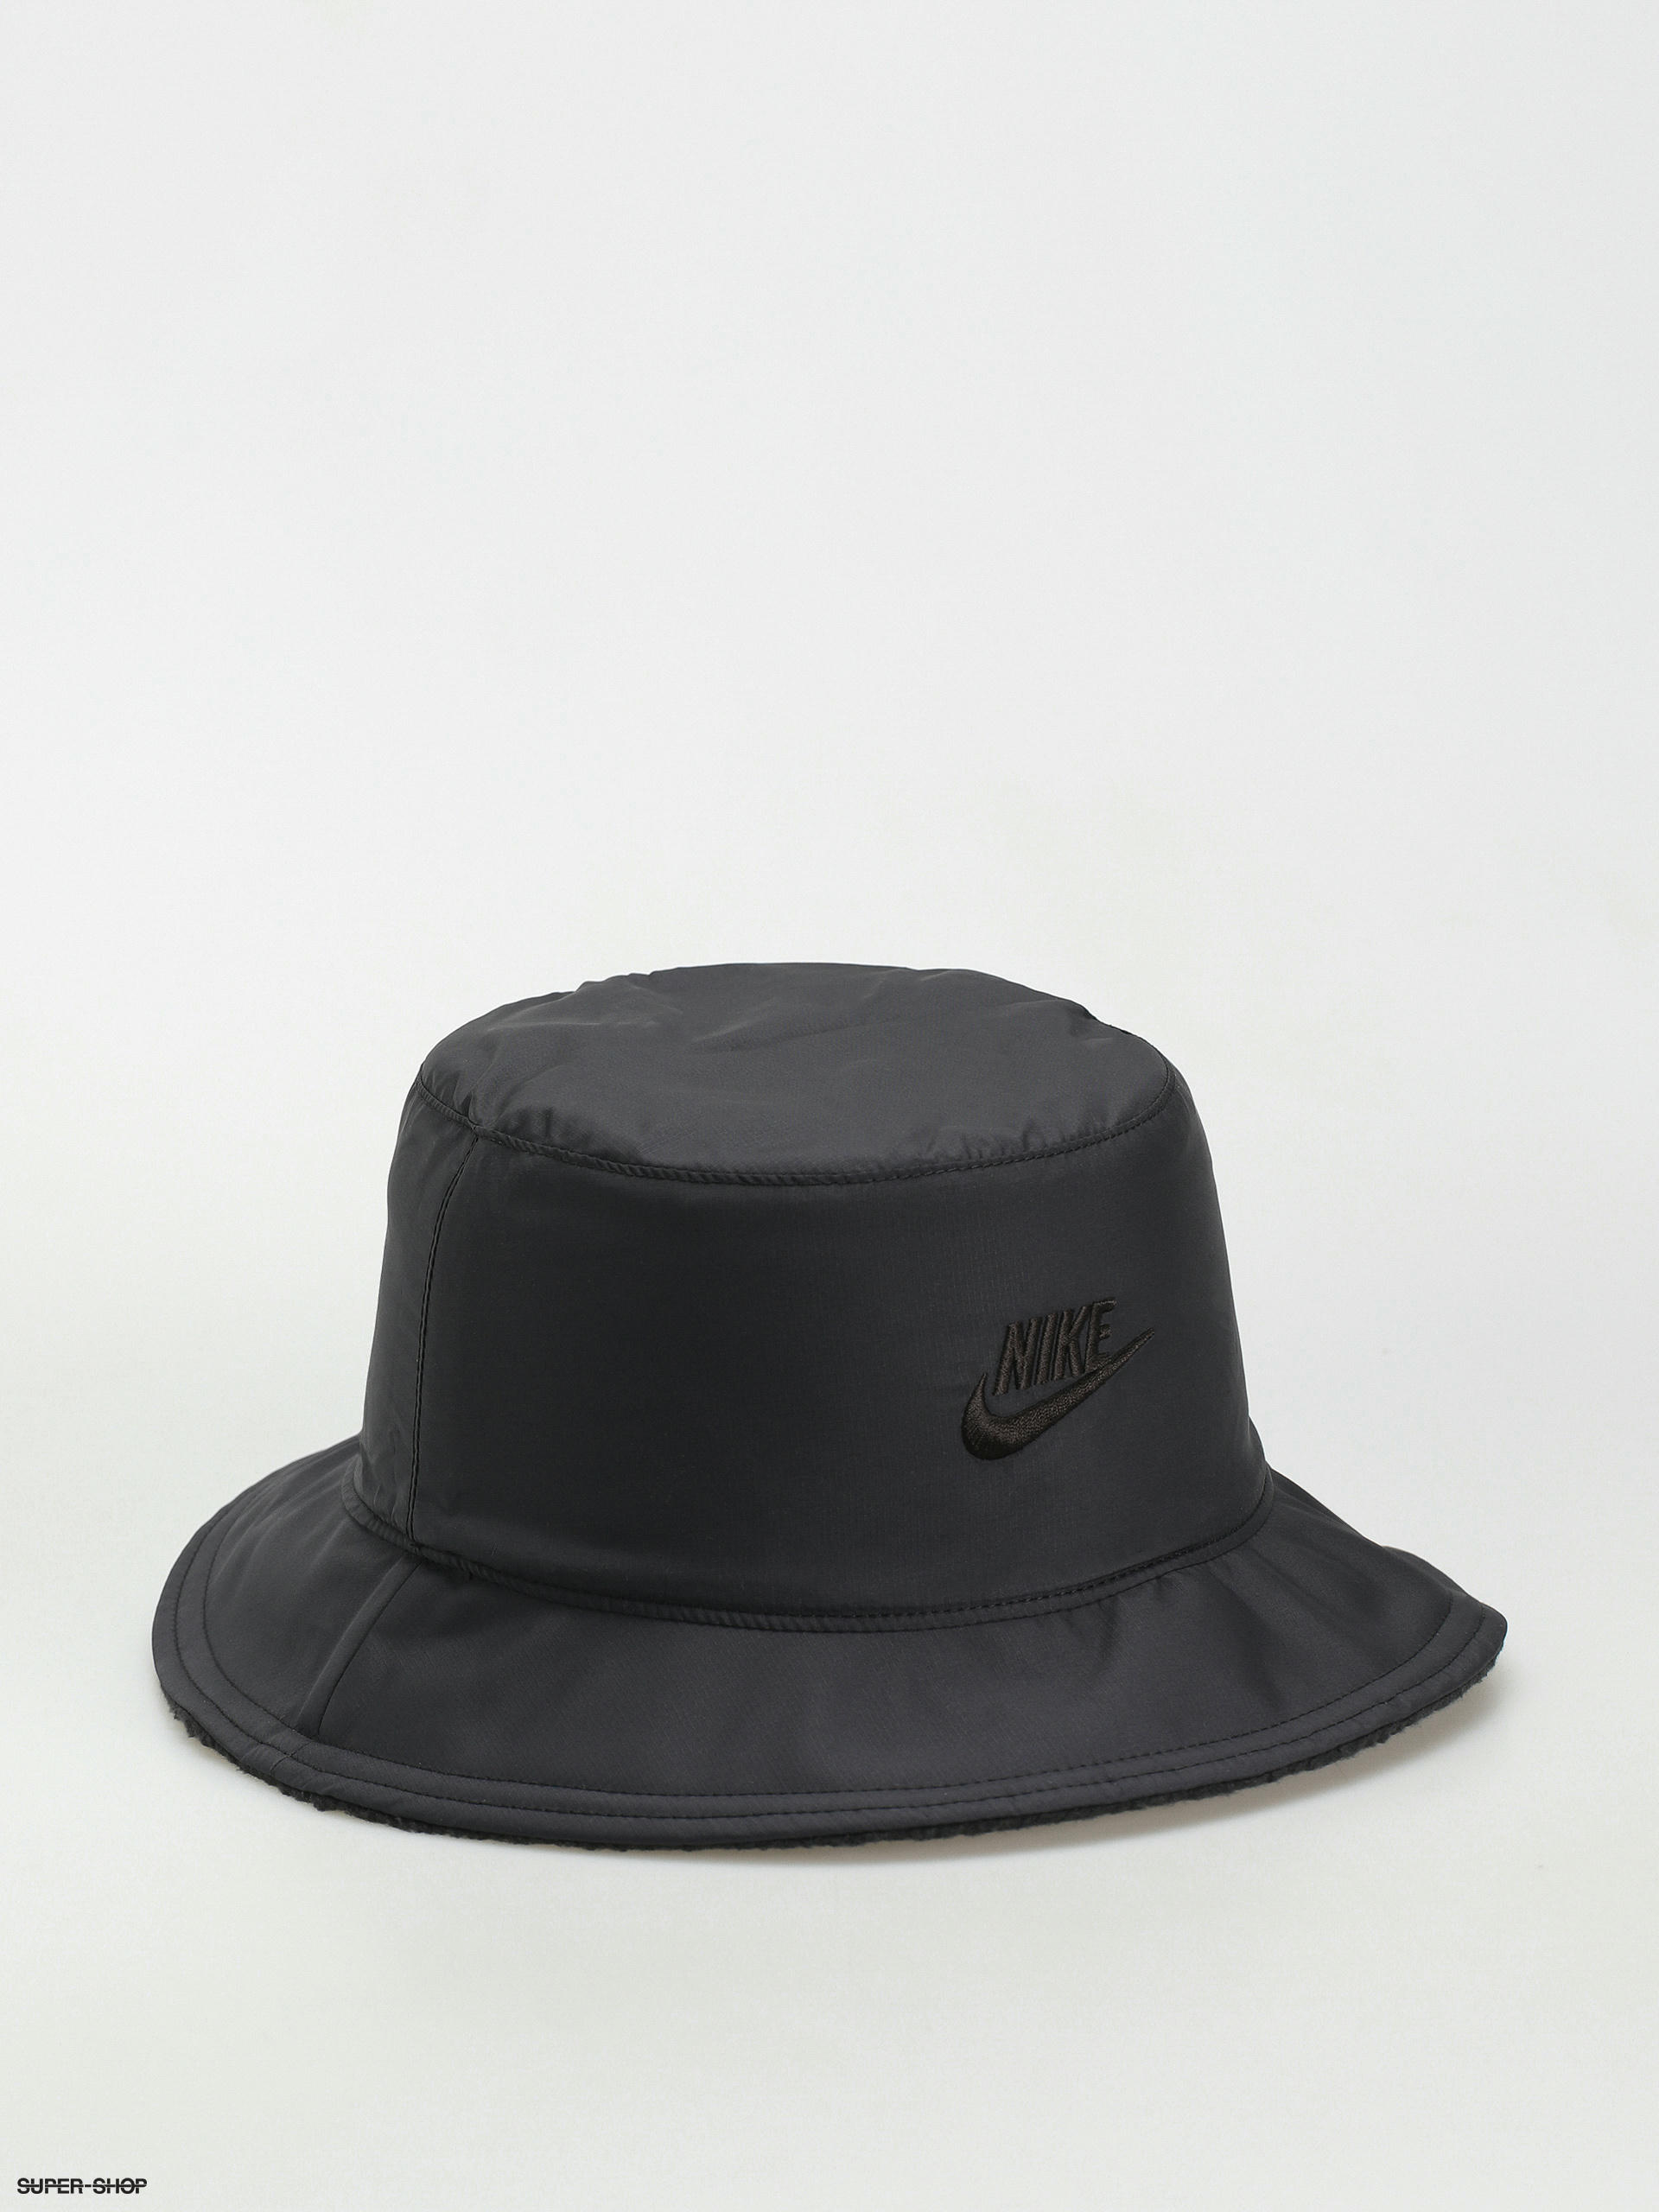 https://static.super-shop.com/1431632-nike-sb-apex-sq-outdoor-hat-black.jpg?w=1920